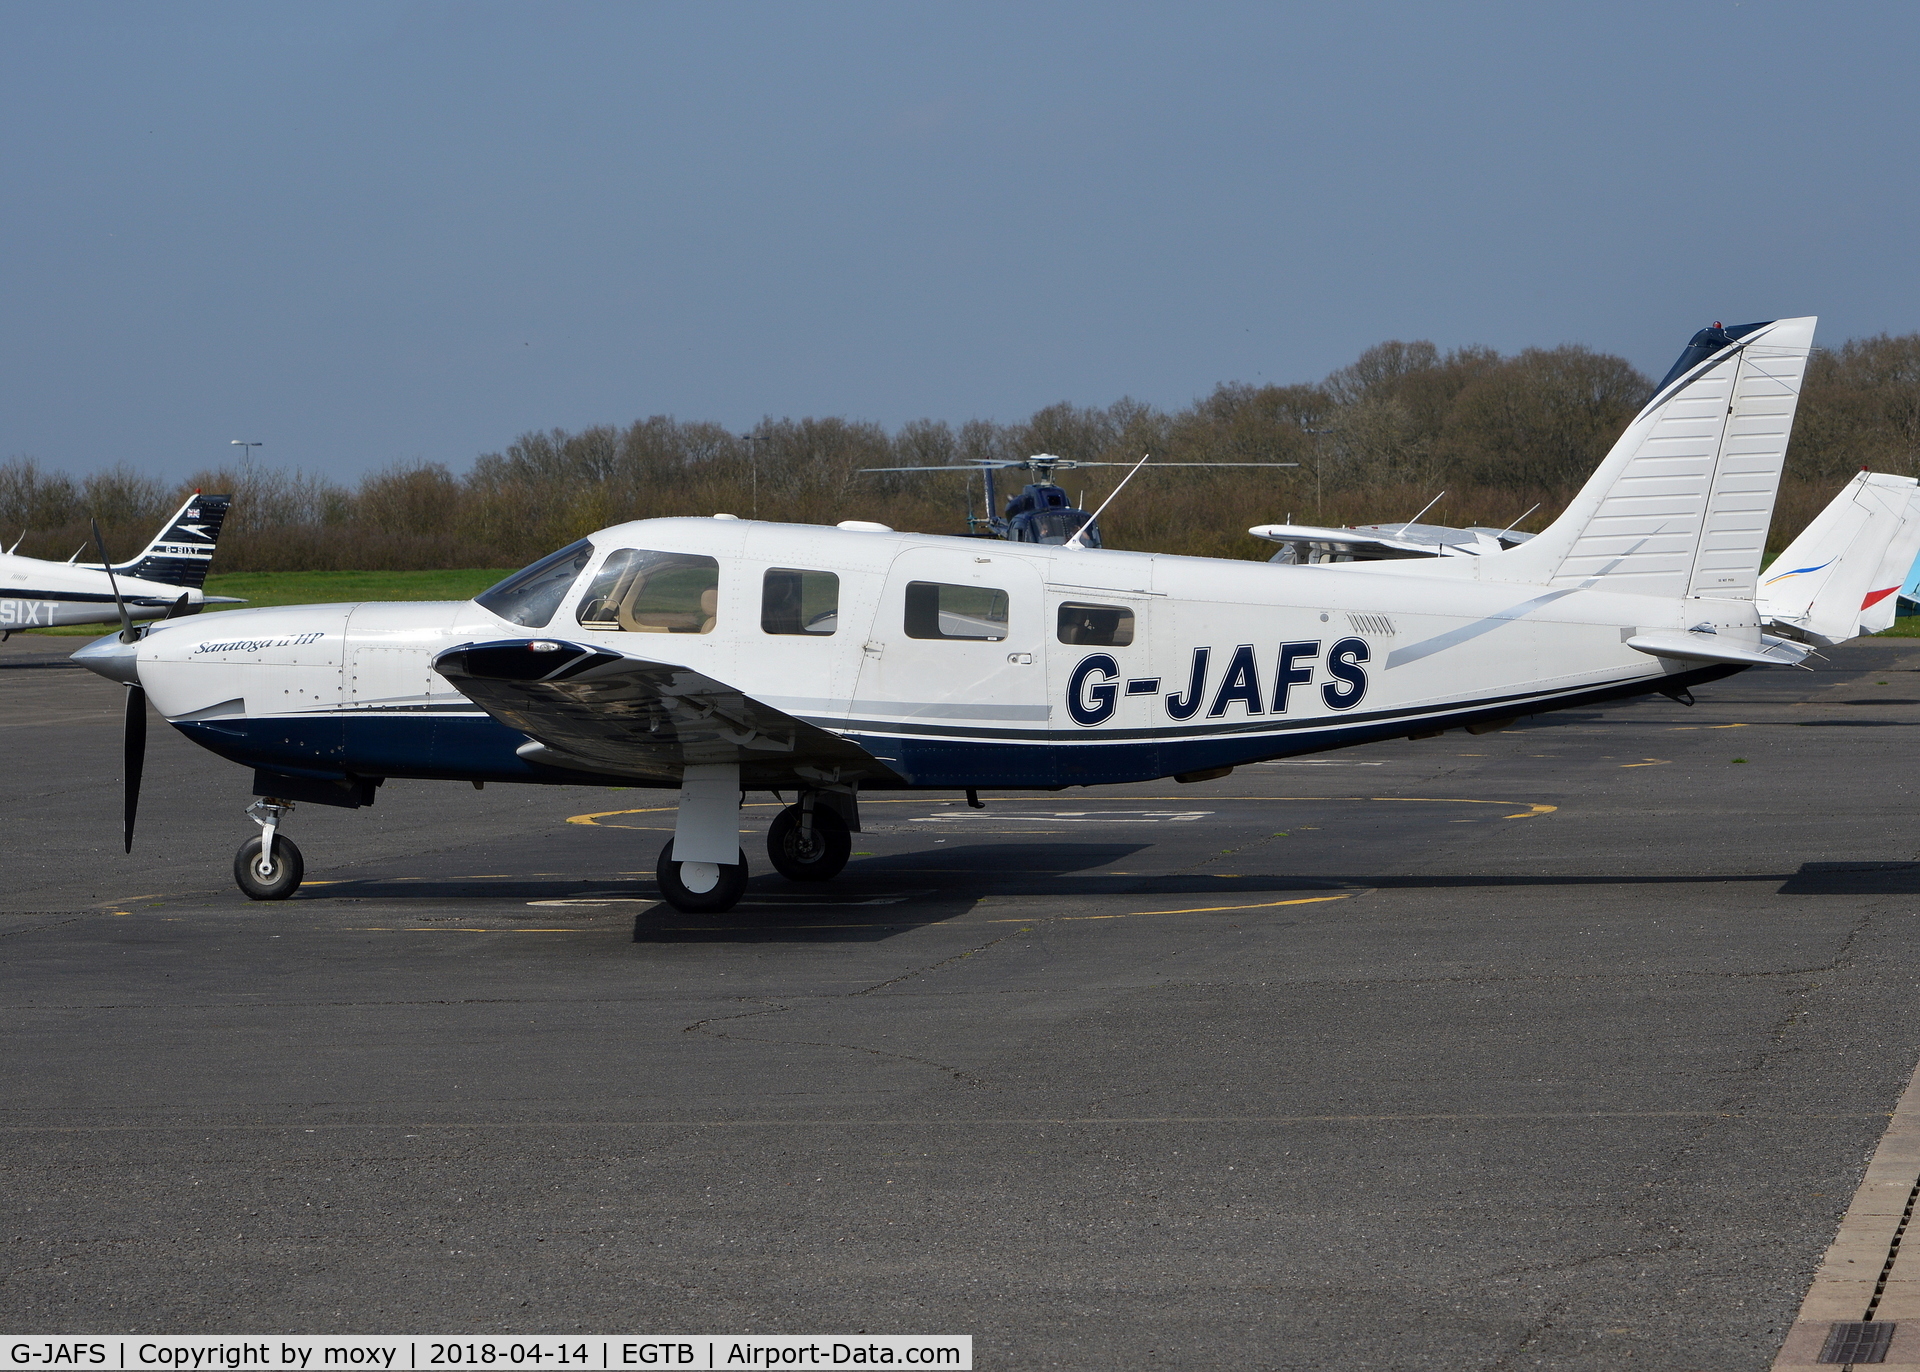 G-JAFS, 2005 Piper PA-32R-301 Saratoga II HP C/N 3246235, Piper PA-32R-301 Saratoga II HP at Wycombe Air Park. Ex OY-OMG